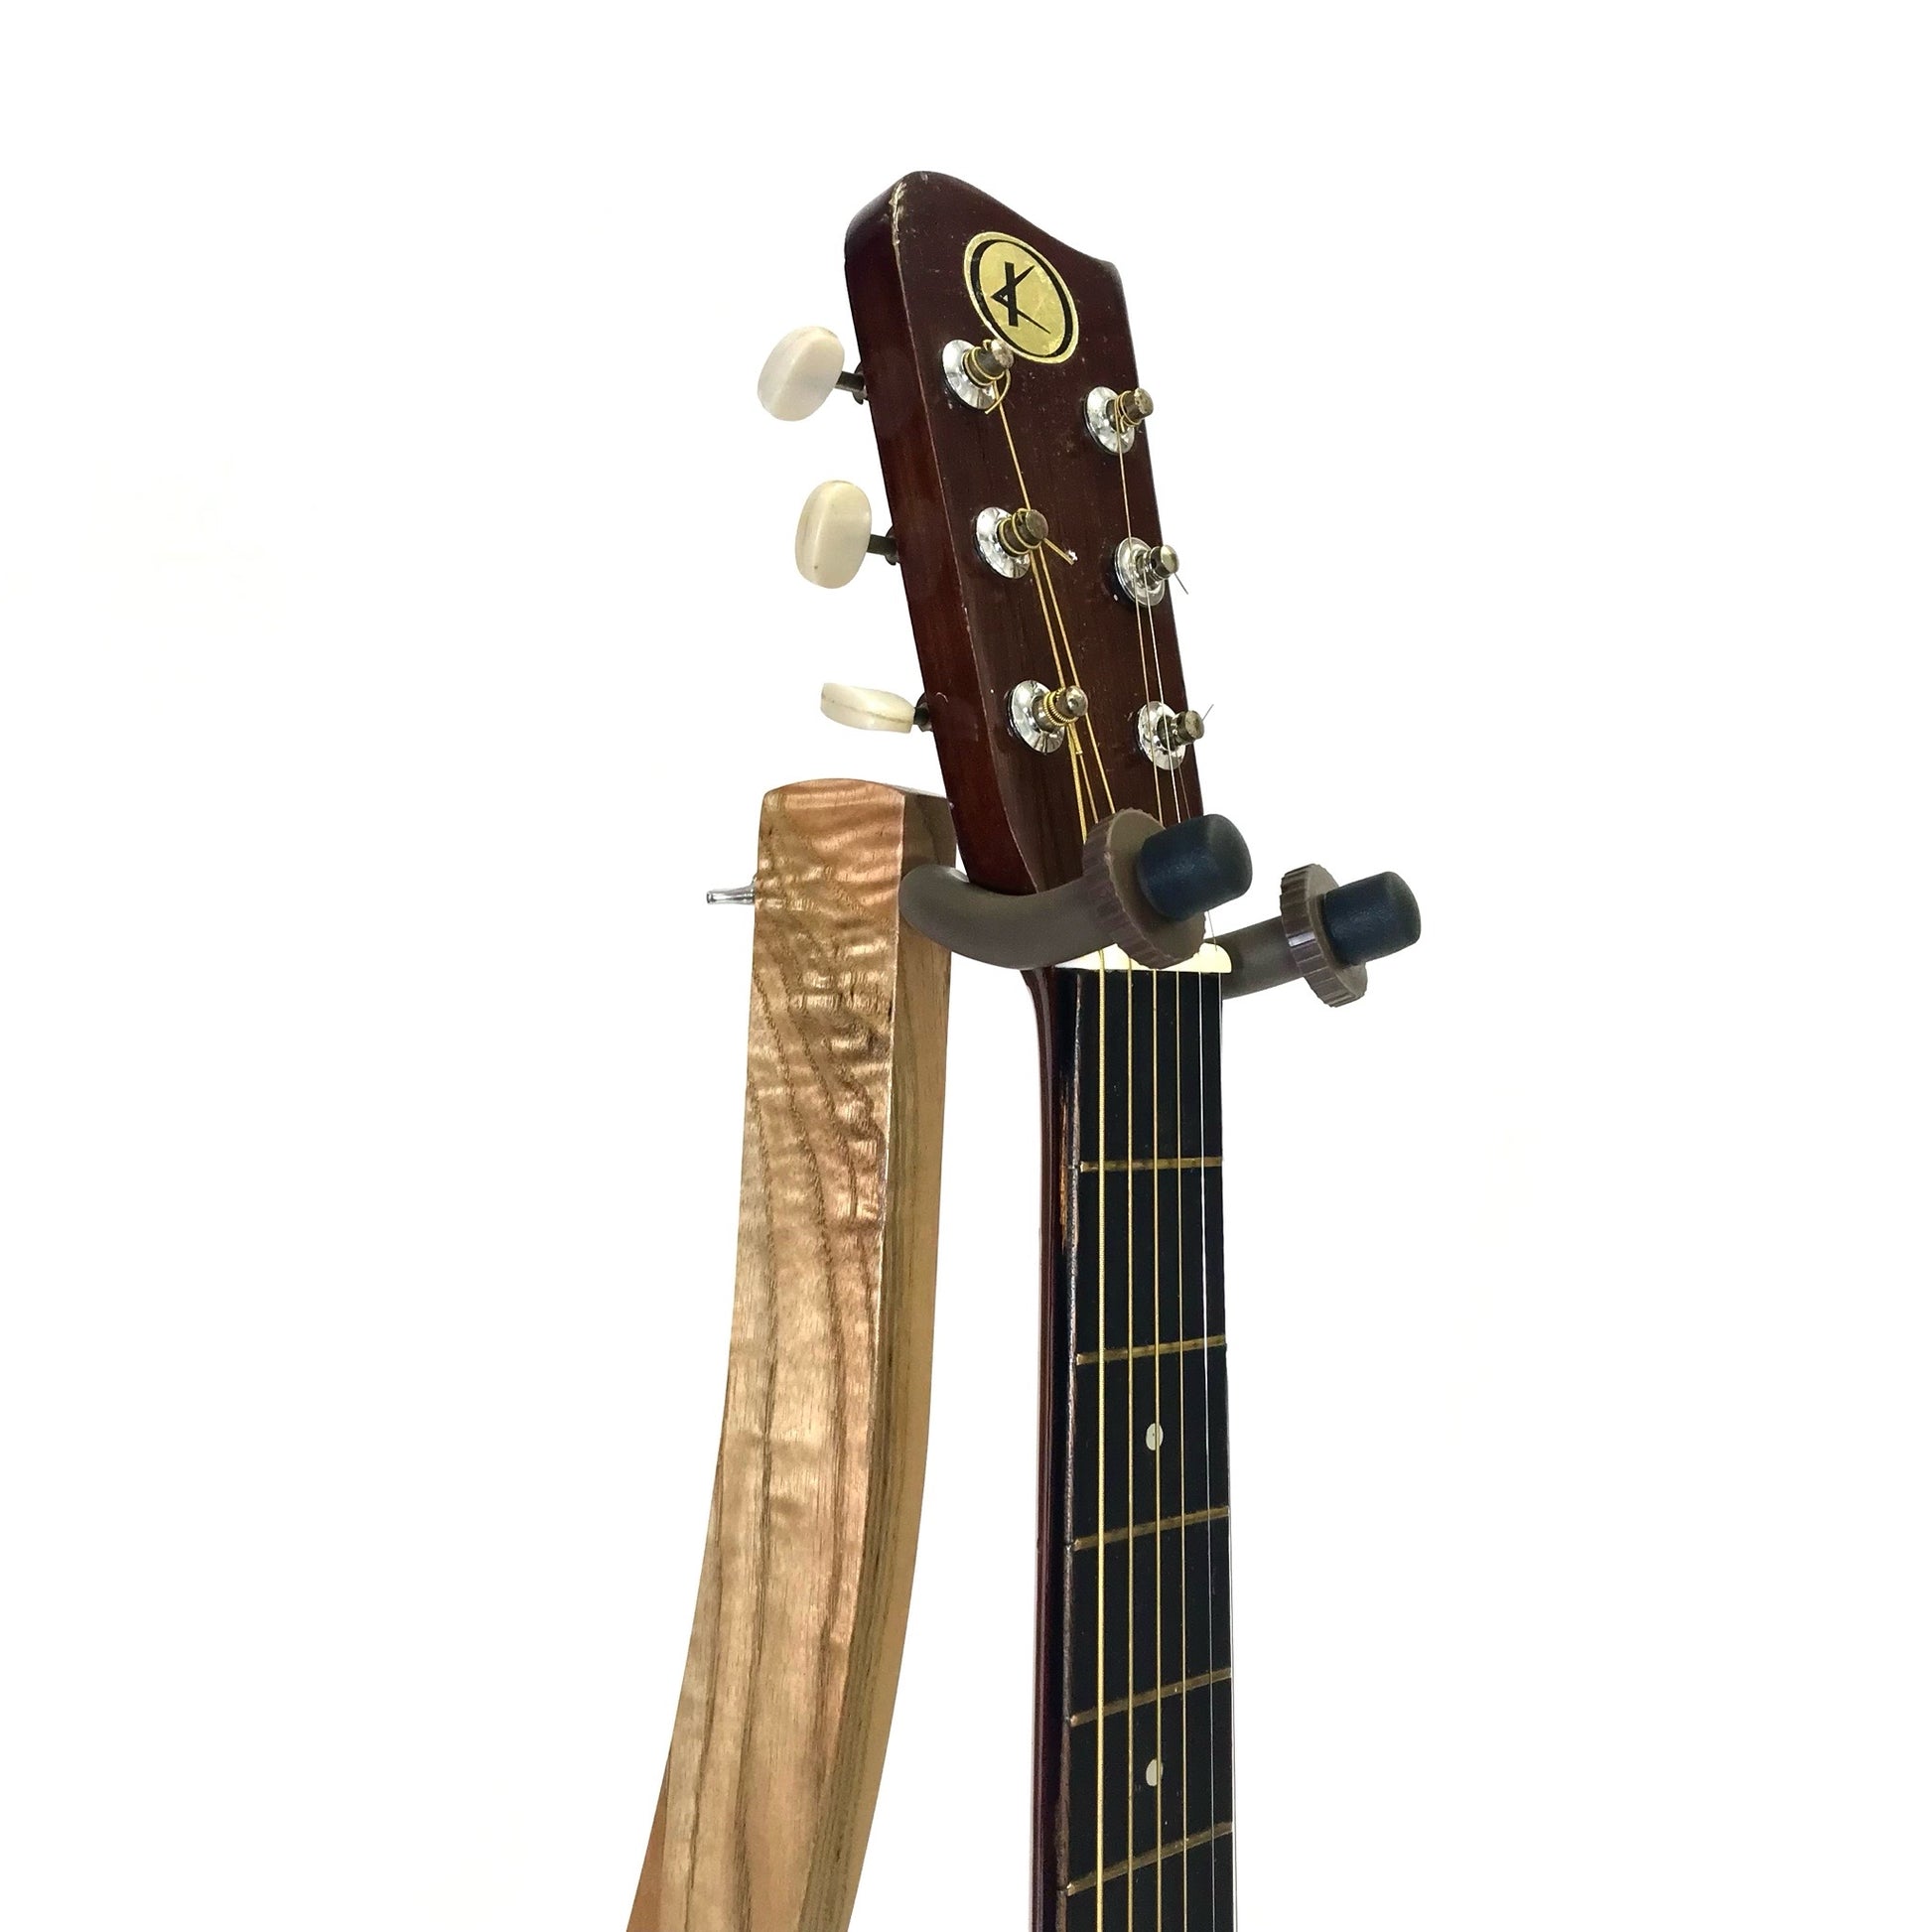 Wooden Electric Guitar Stands, Handmade